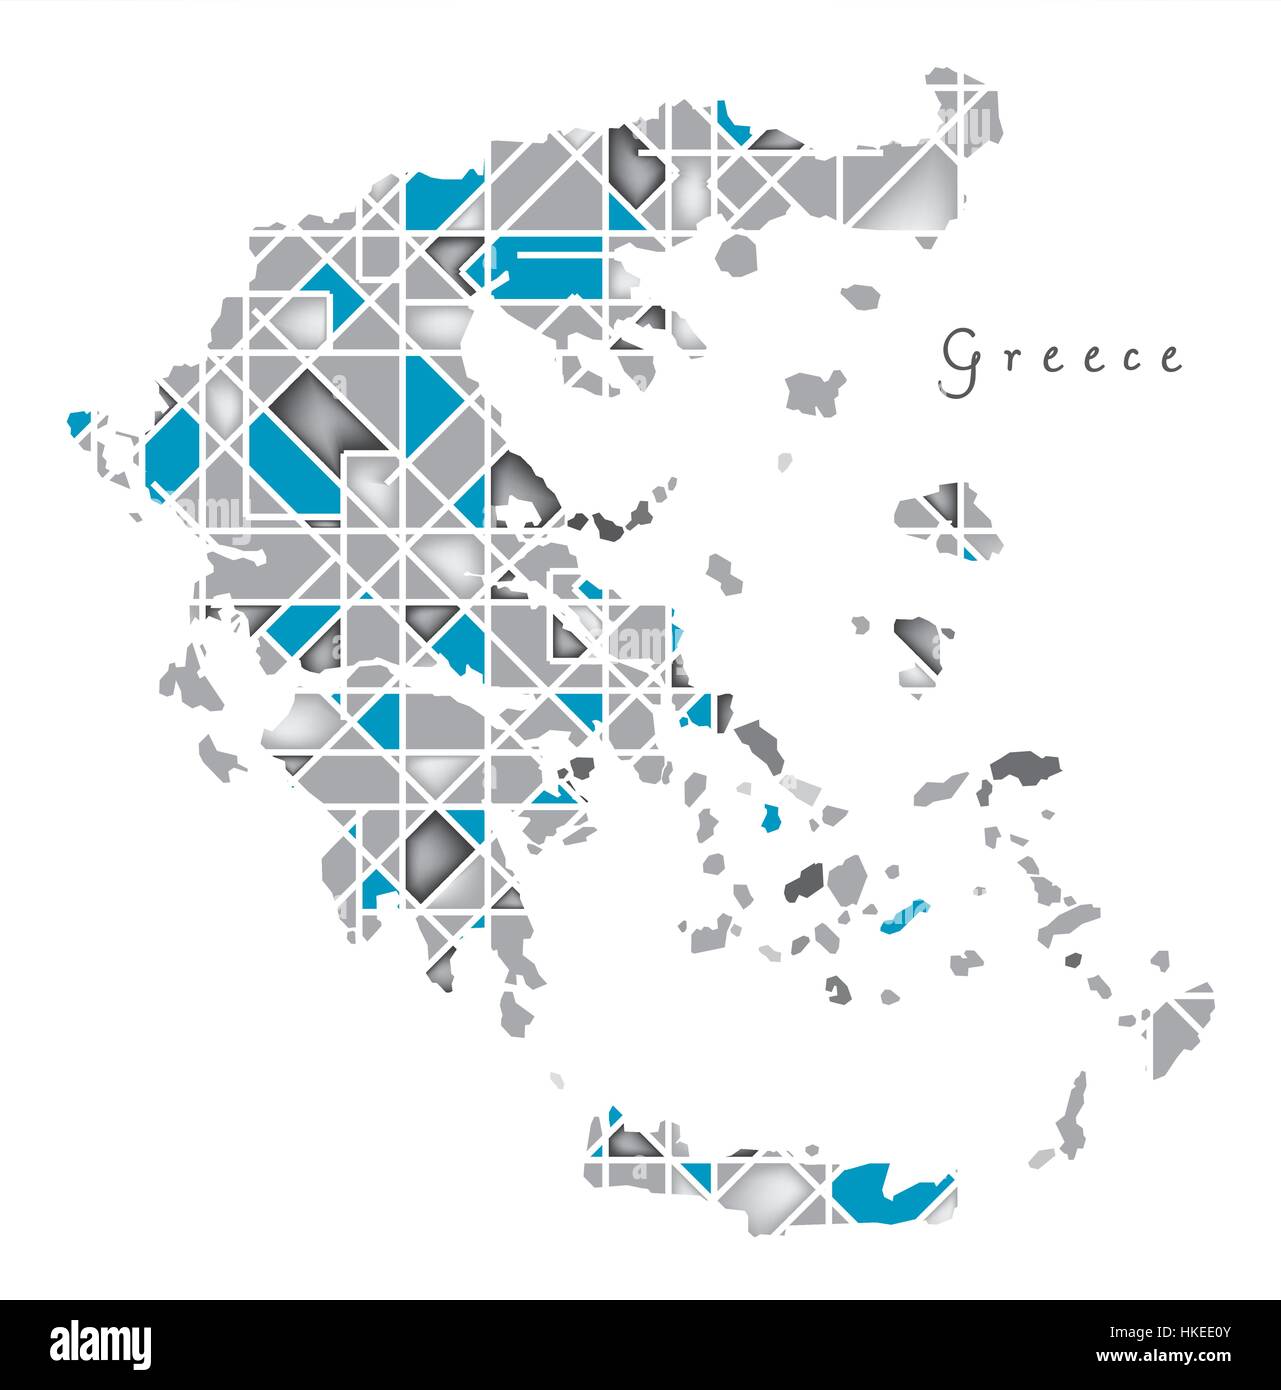 Grecia Mappa crystal diamond style Illustrazione illustrazione Illustrazione Vettoriale